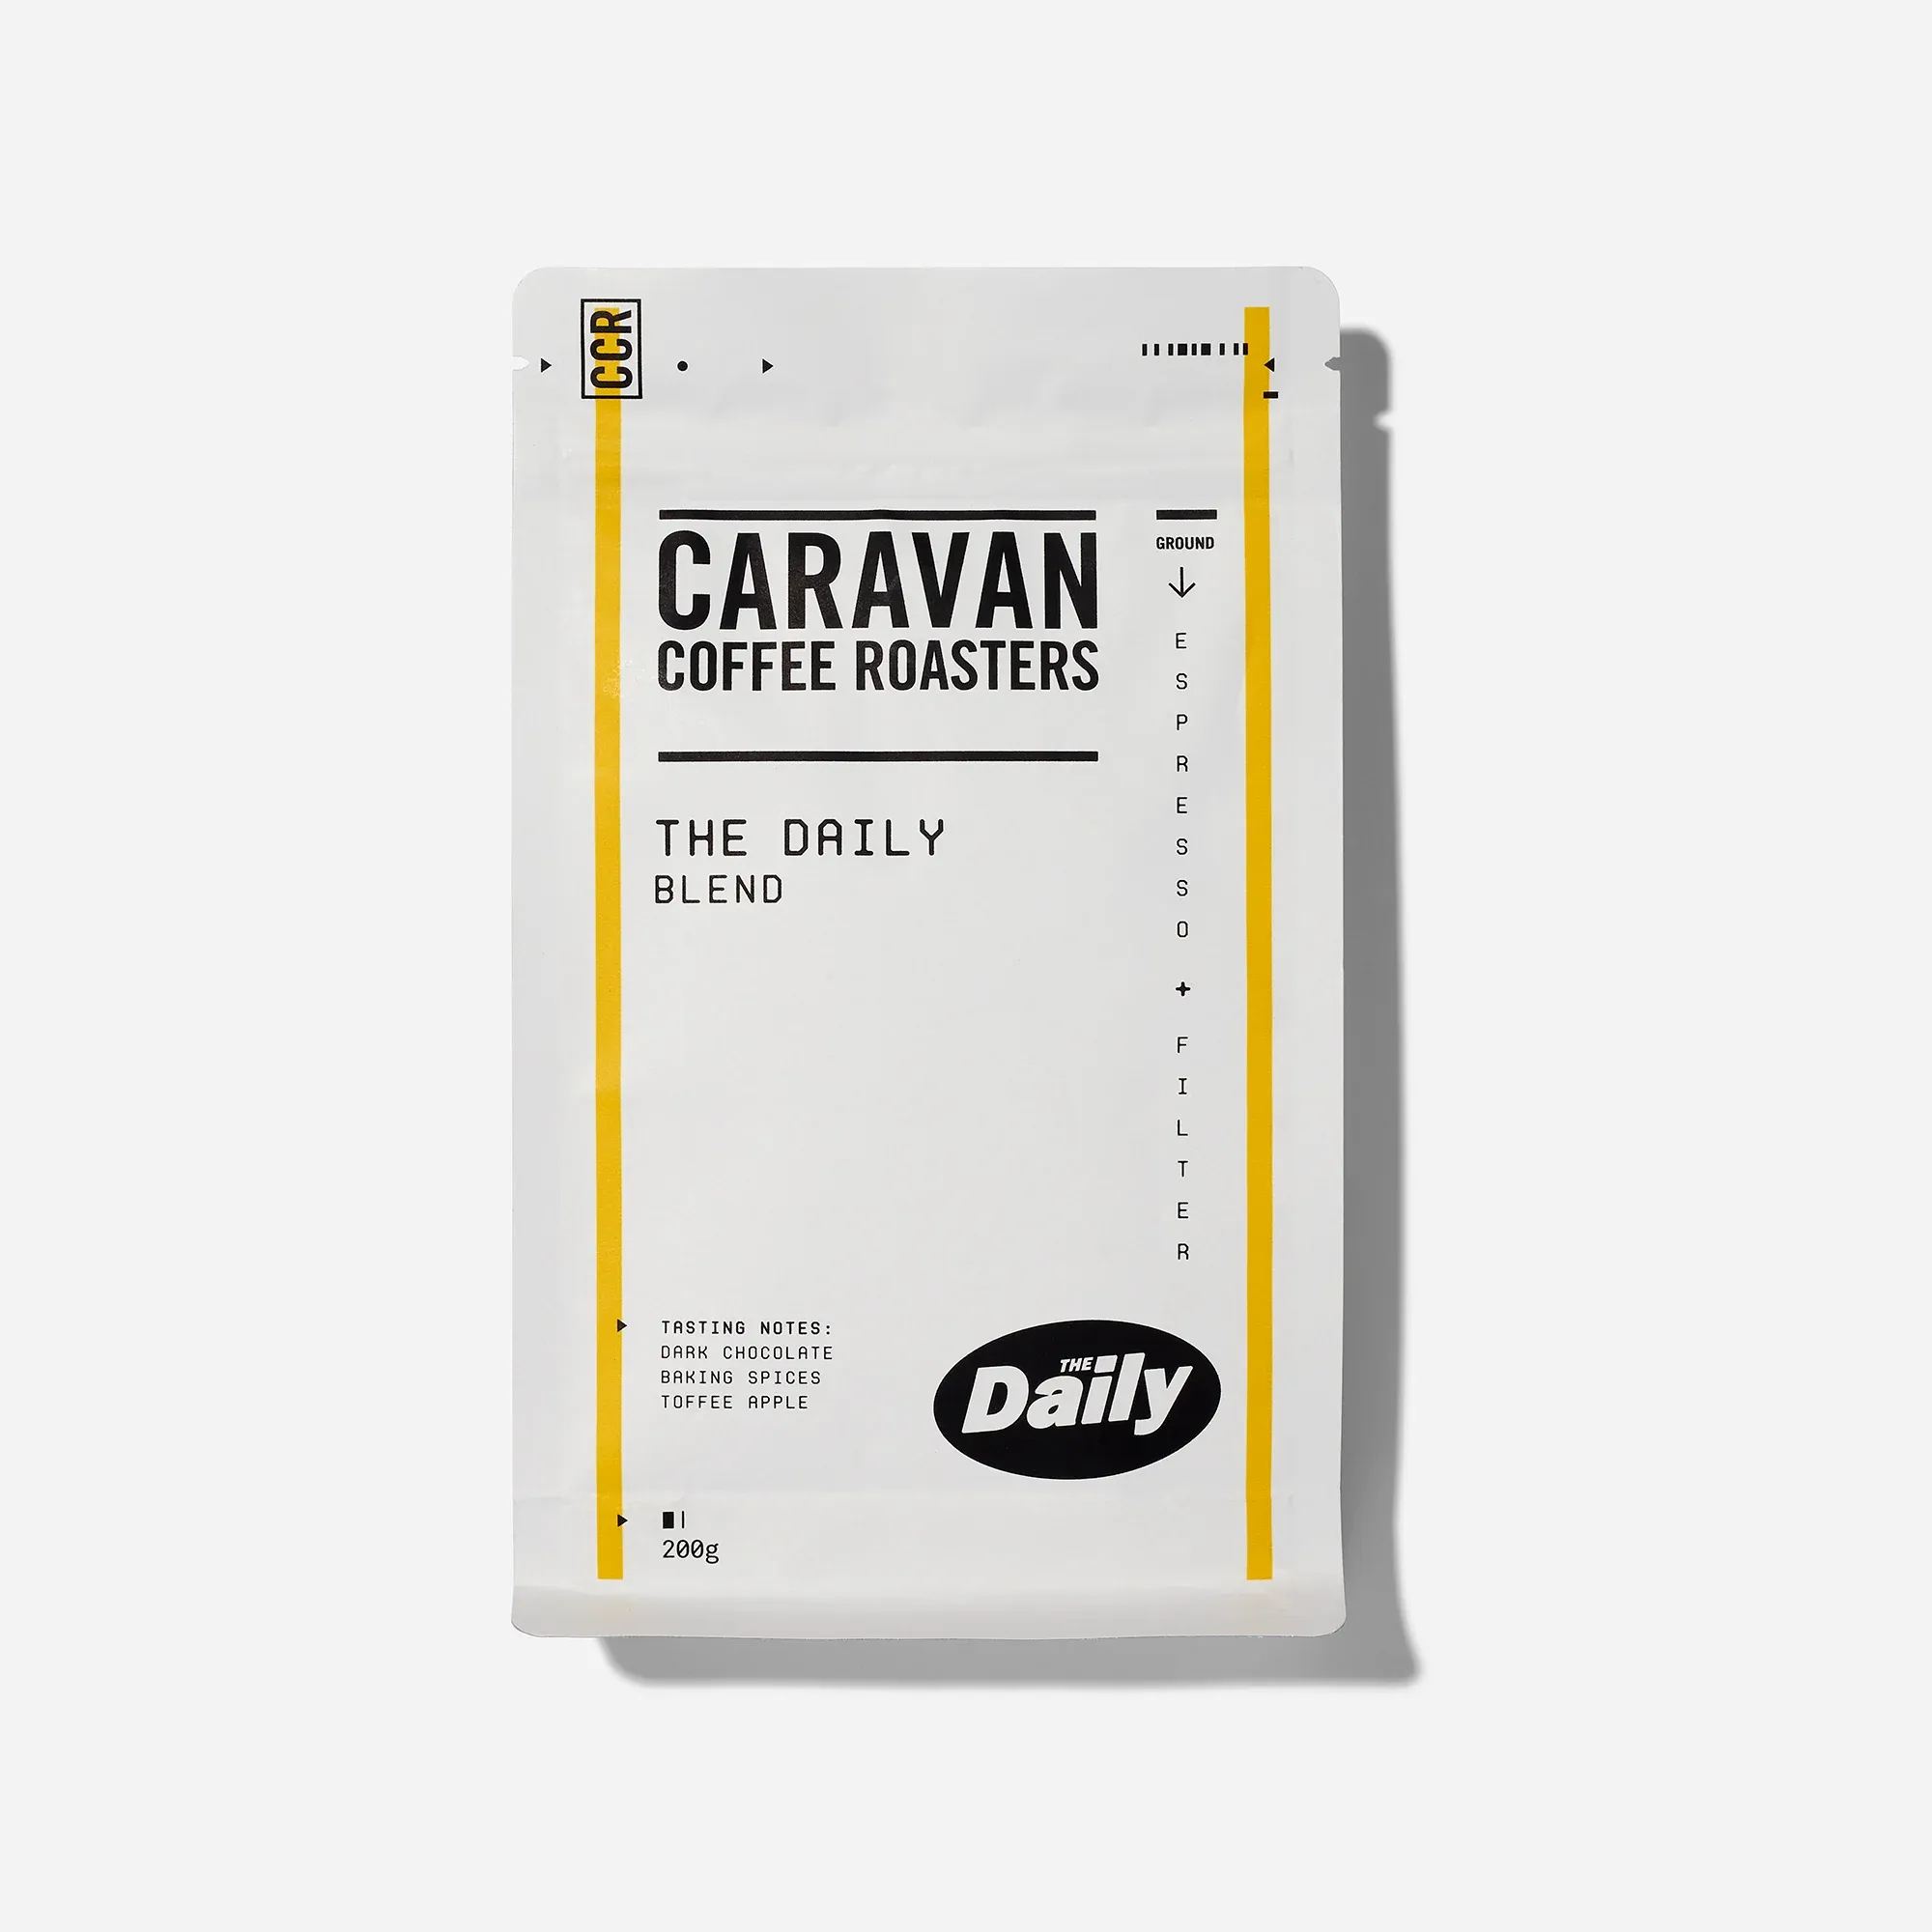 Caravan – The Daily Blend